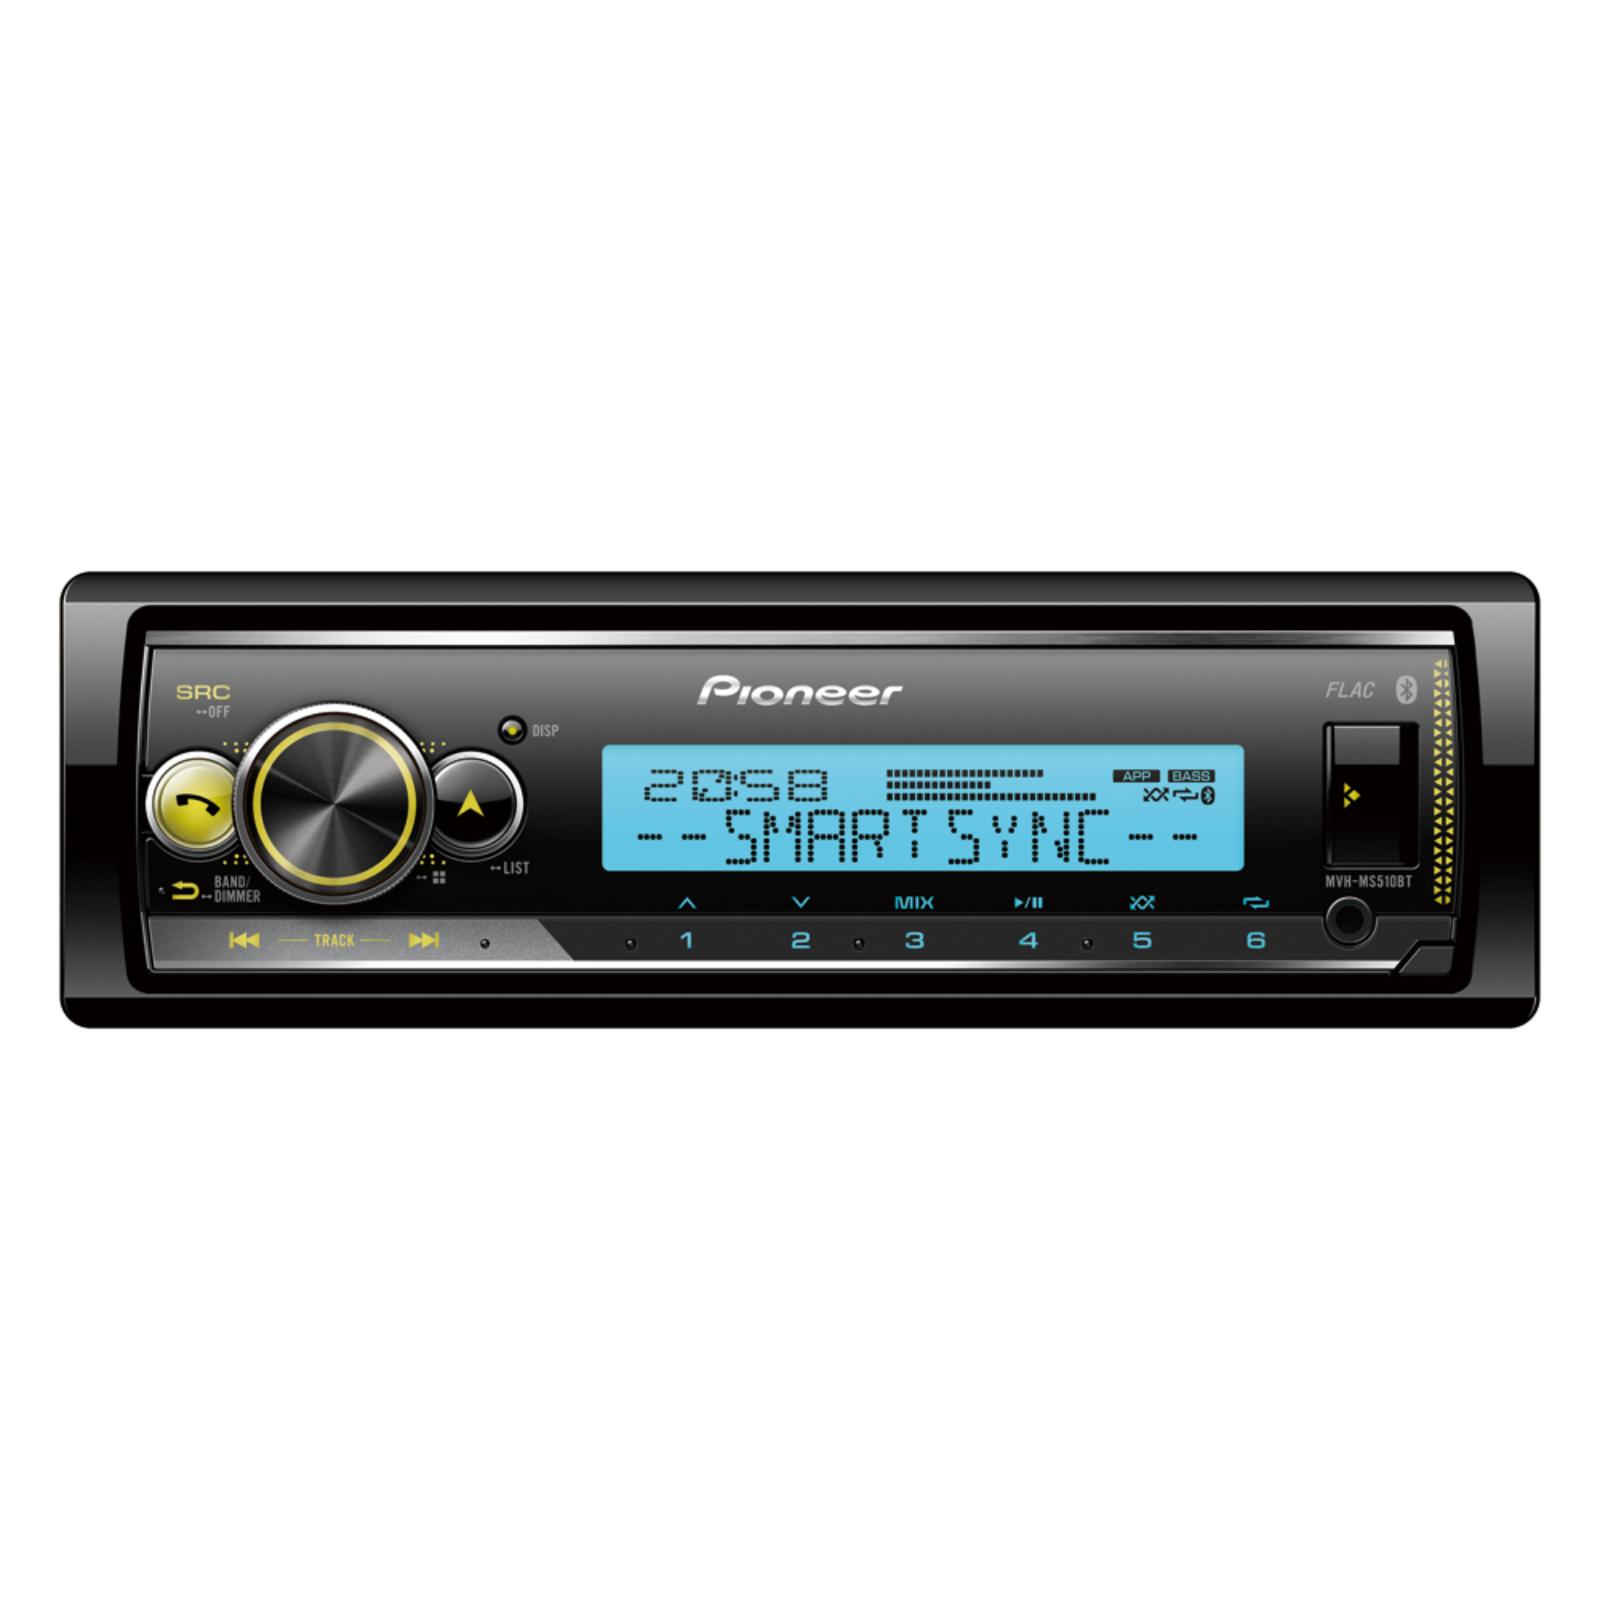 Pioneer MVH-MS510BT marine stereo